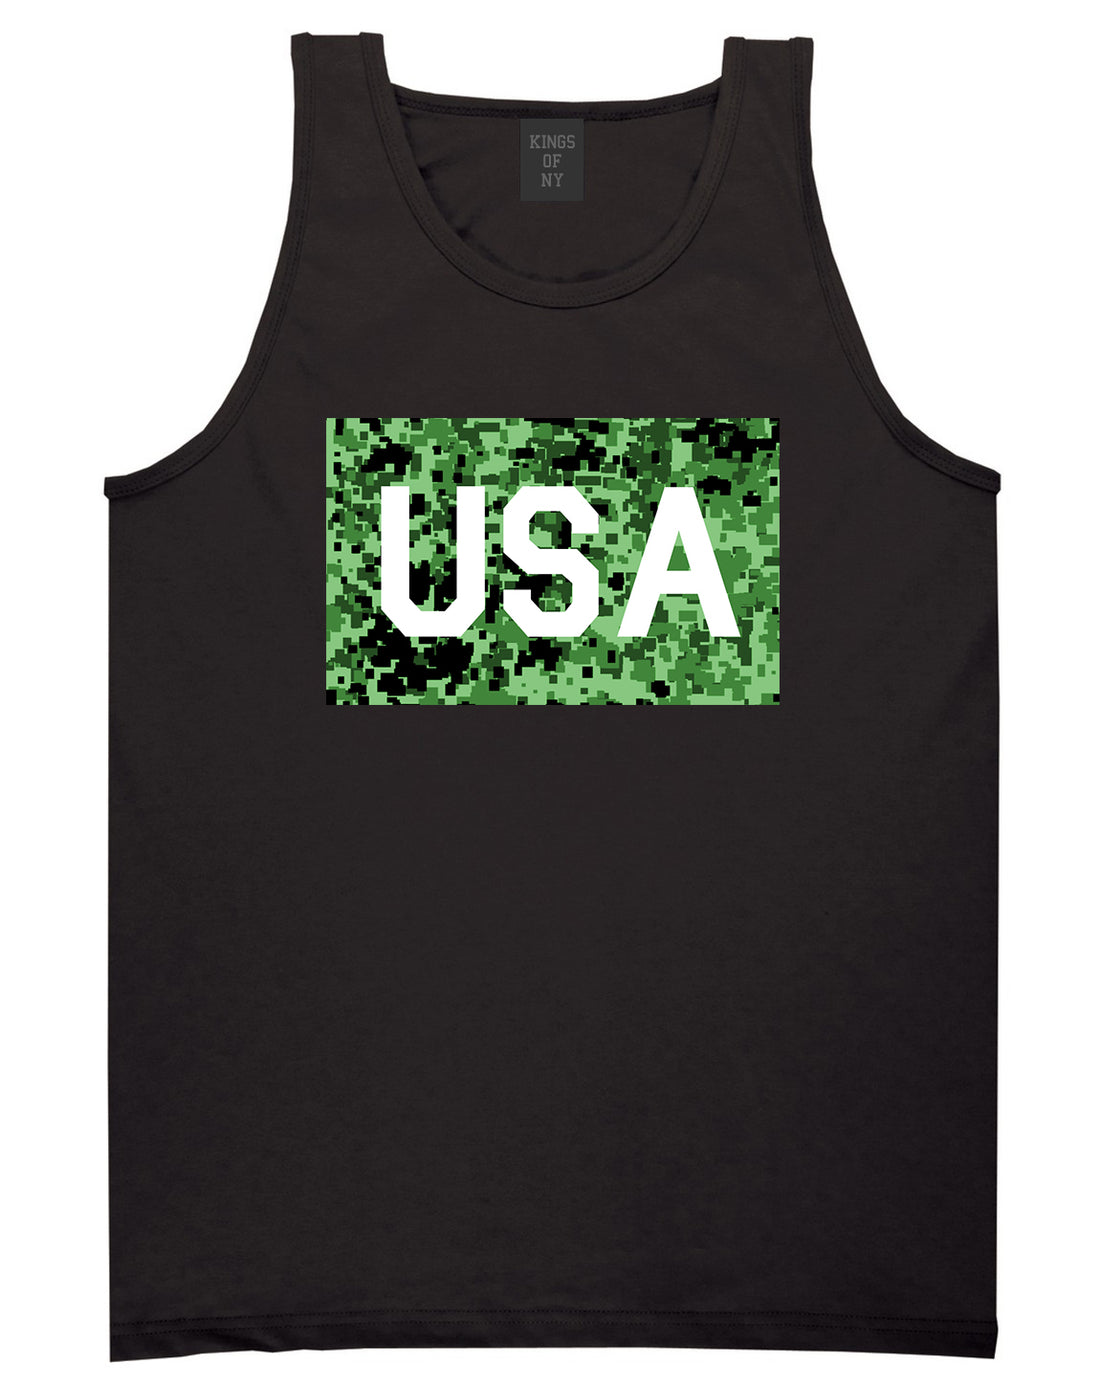 USA_Digital_Camo_Army Mens Black Tank Top Shirt by Kings Of NY